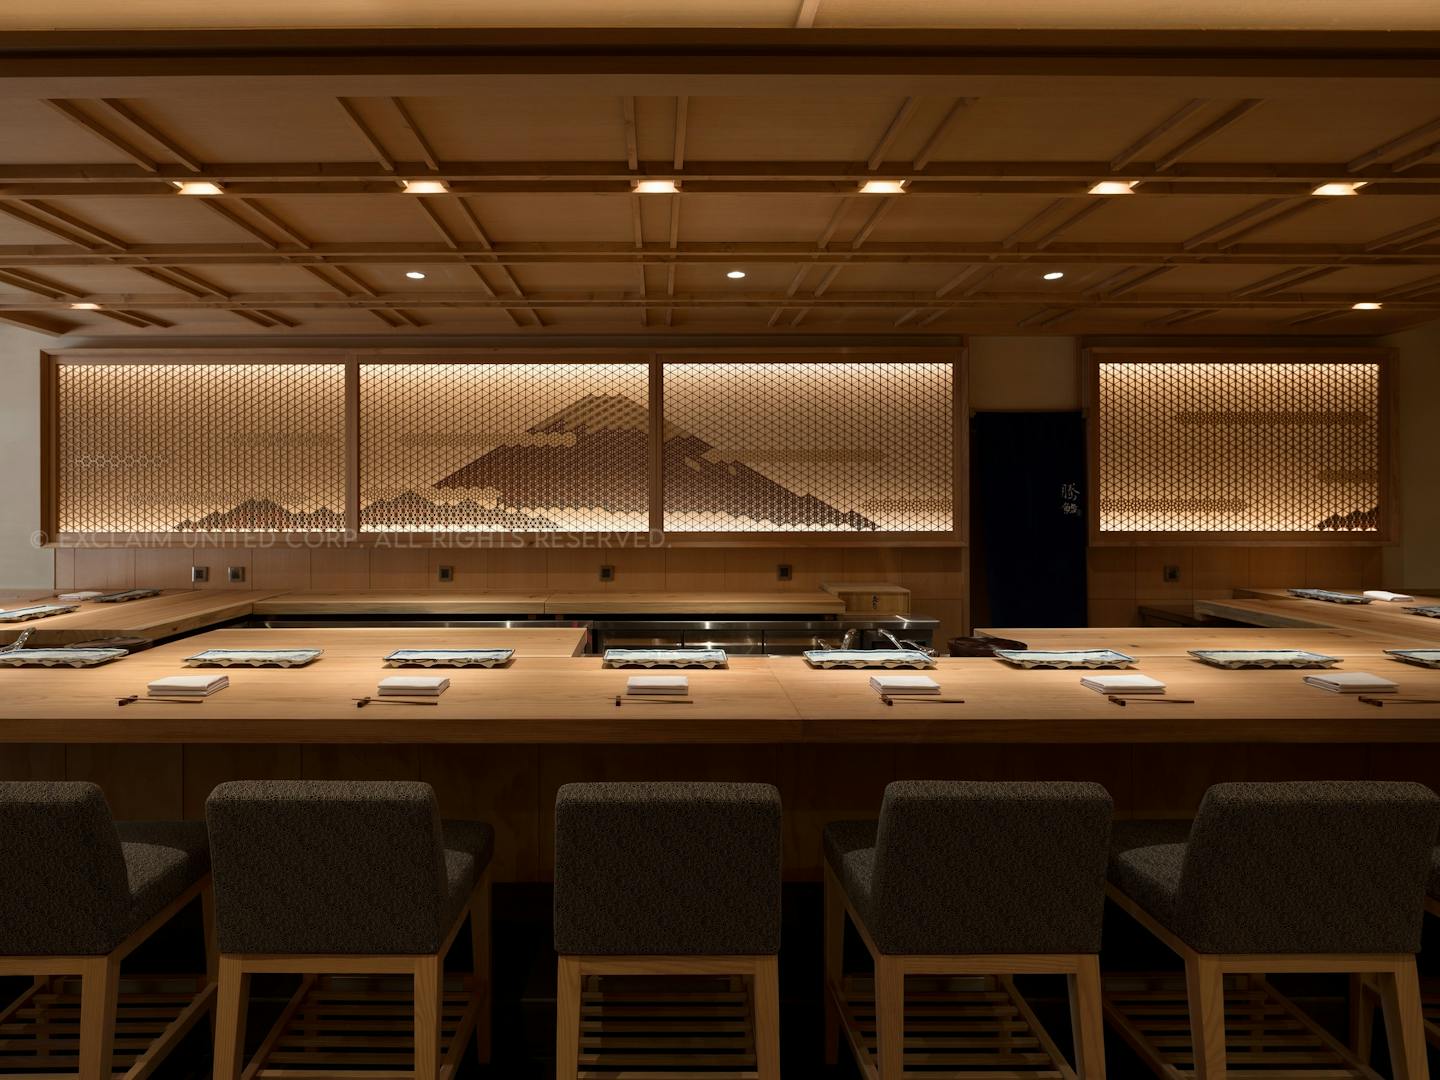 COMMERCIAL INTERIOR DESIGN｜
Tou Sushi 騰鮨 
Japanese Omakase Restaurant Design Concept